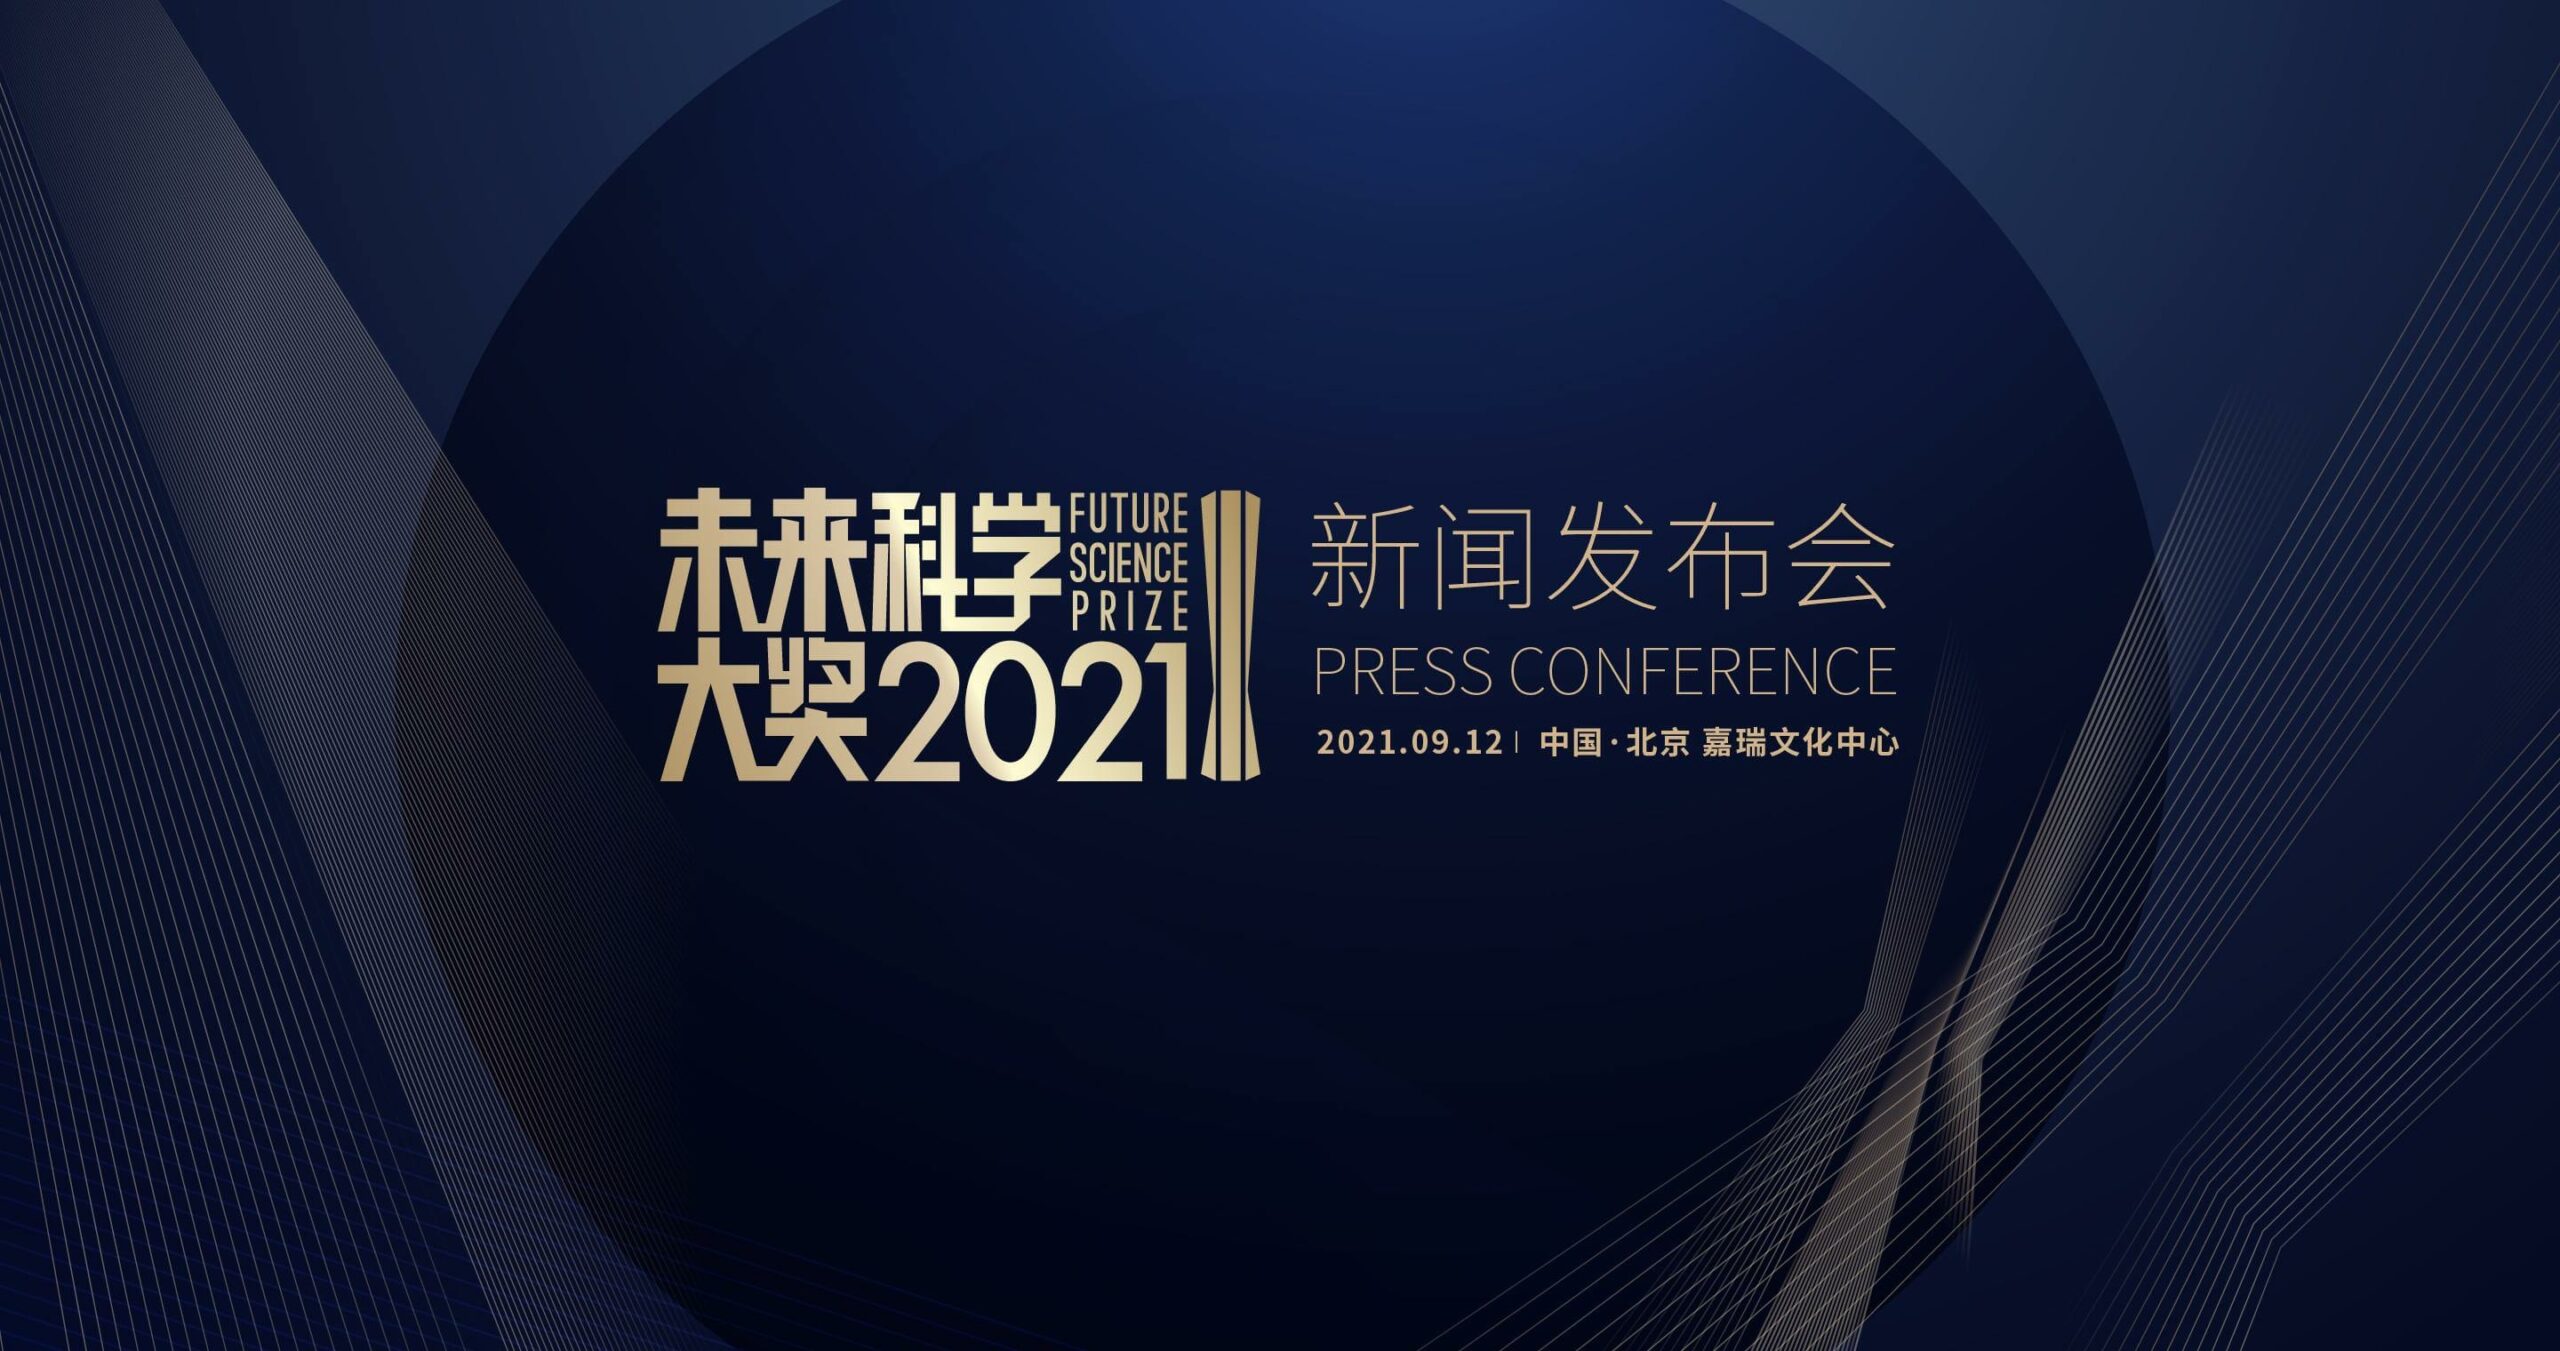 Announcement of future winners of the 2022 Science Prize: Wenhui Li, Xueming Yang, Ngaiming Mok